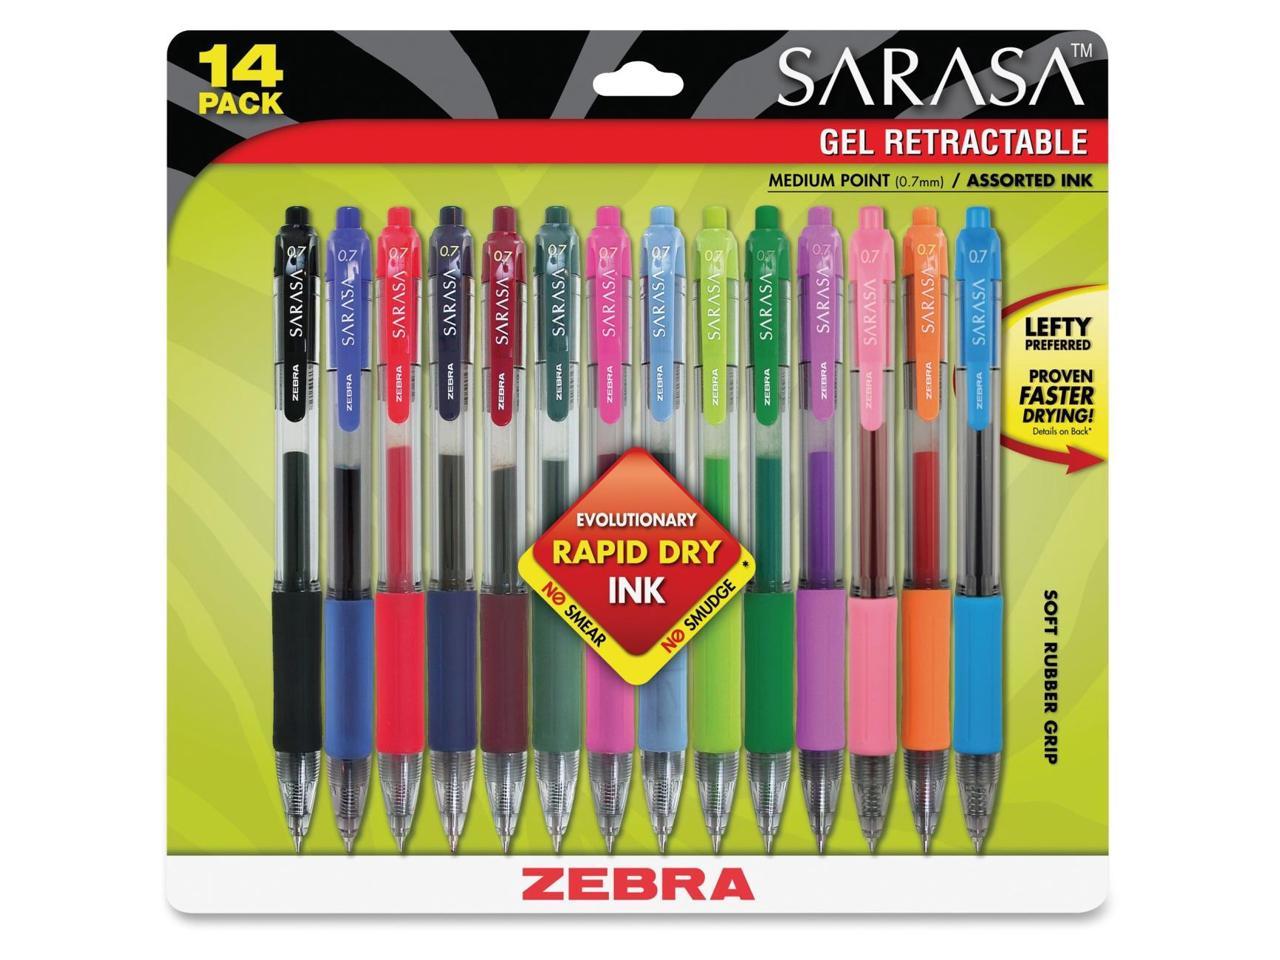 Zebra Sarasa Retractable Gel Ink Pens, Medium Point 0.7mm, Assorted Color Rapid Dry Ink, 14-Count - image 2 of 2